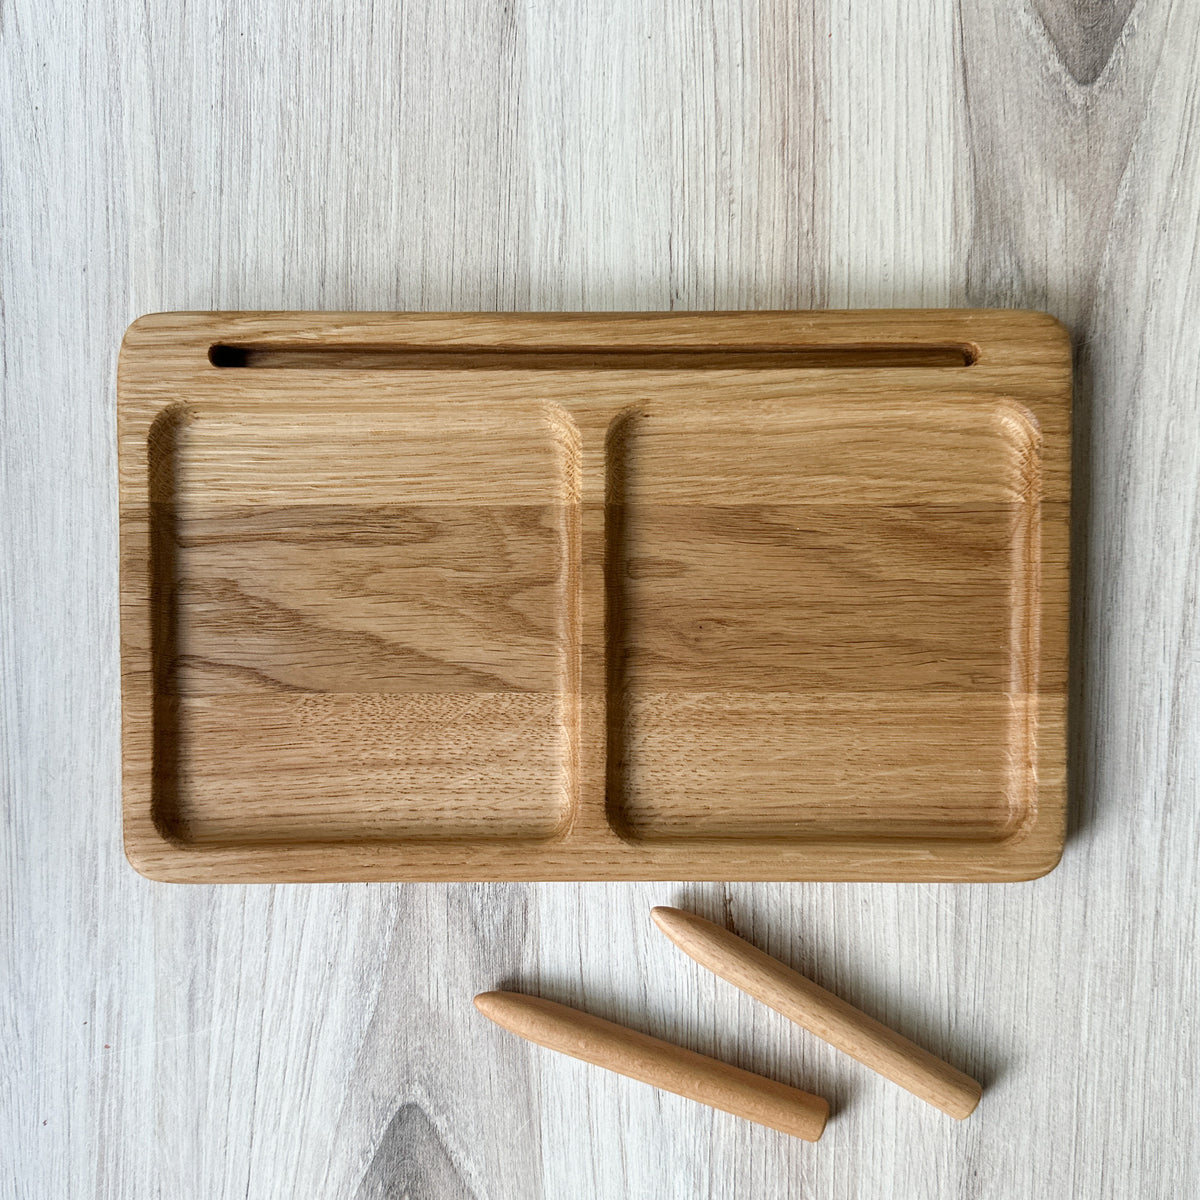 Montessori Wooden 2 Part Sand Tray with Flashcard Holder - 2 Part